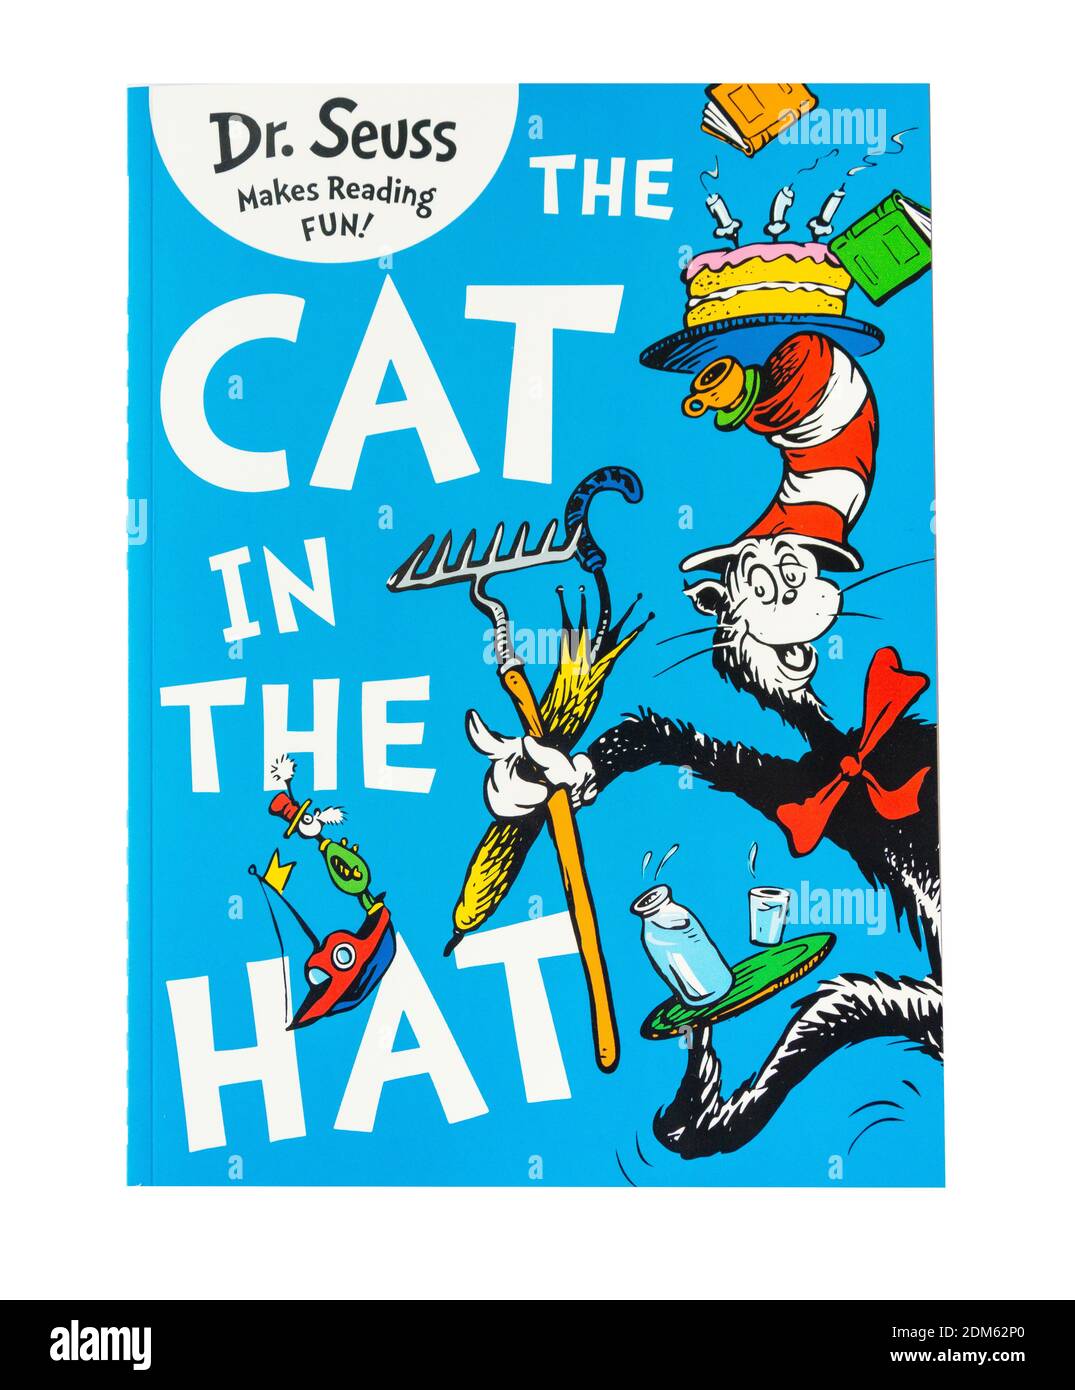 The Cat in the hat von Dr. Seuss, Greater London, England, Großbritannien Stockfoto